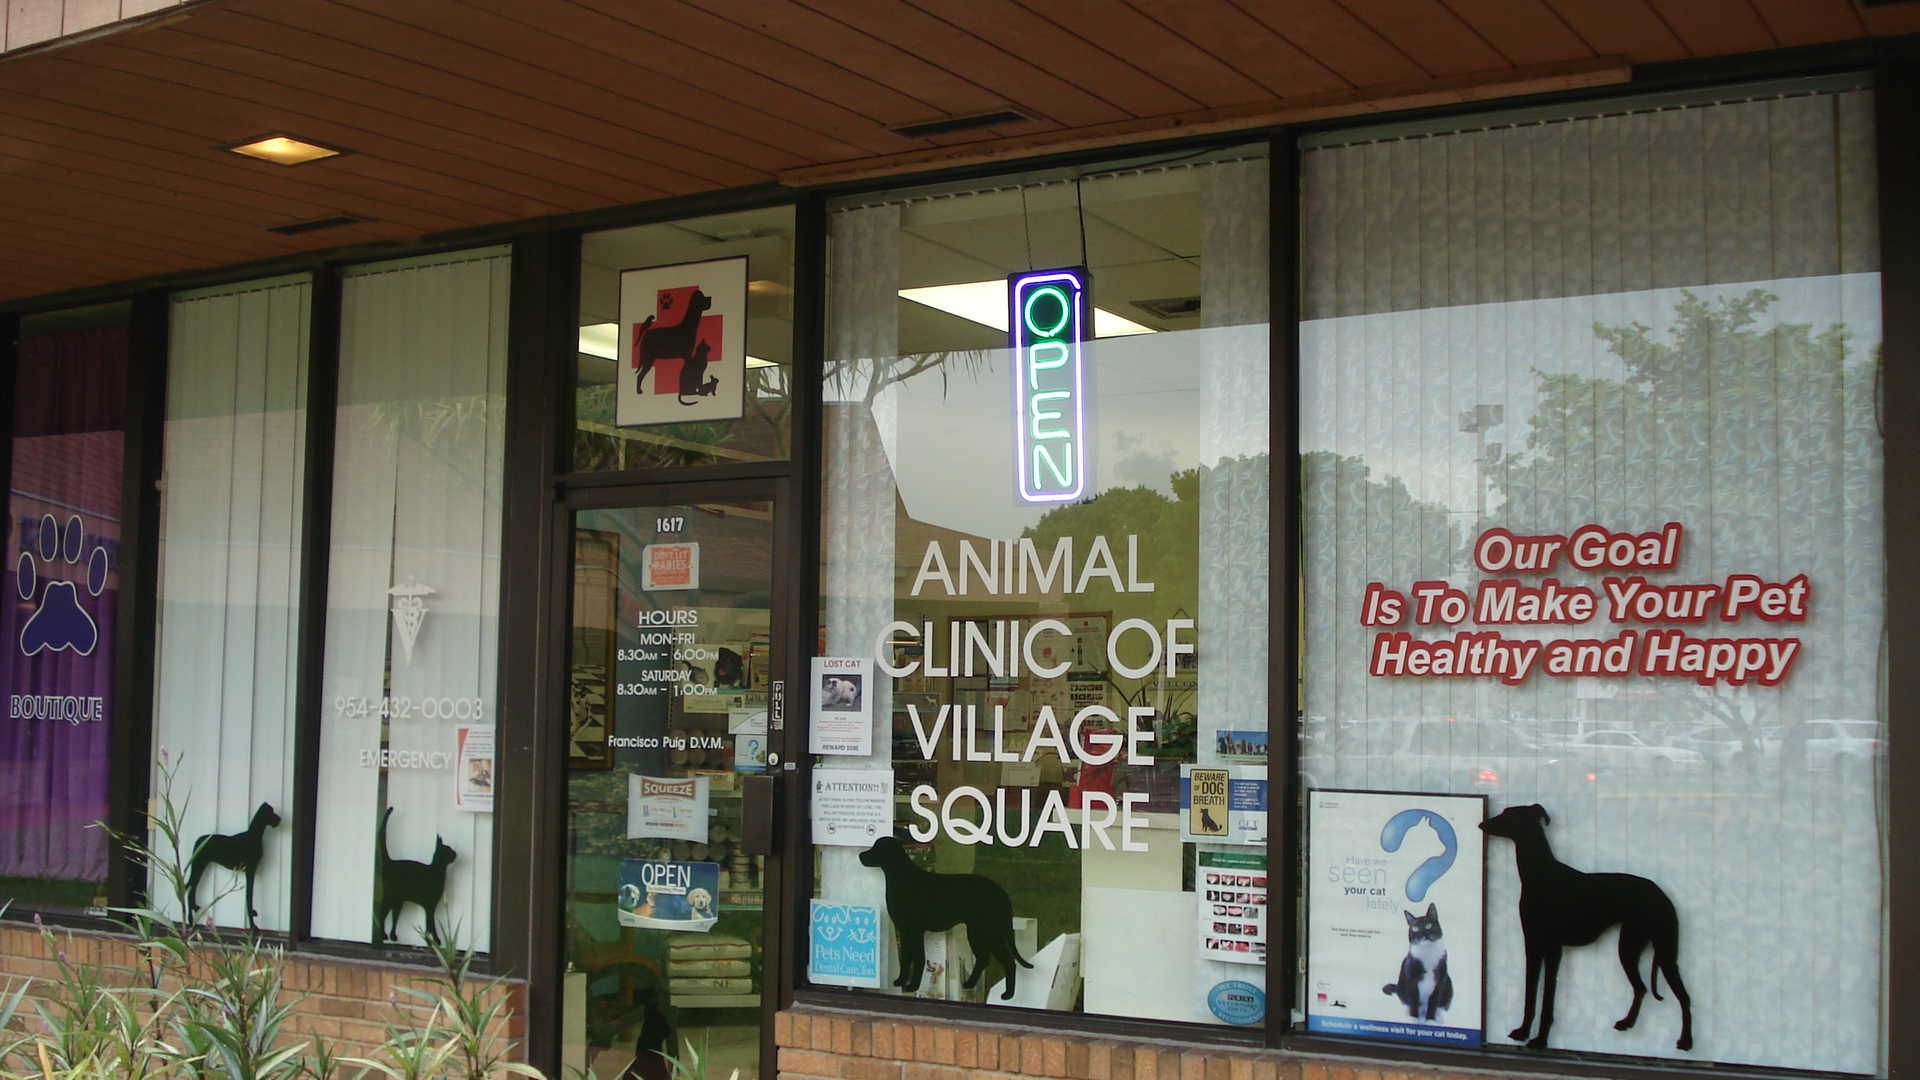 Animal Clinic of Village Square